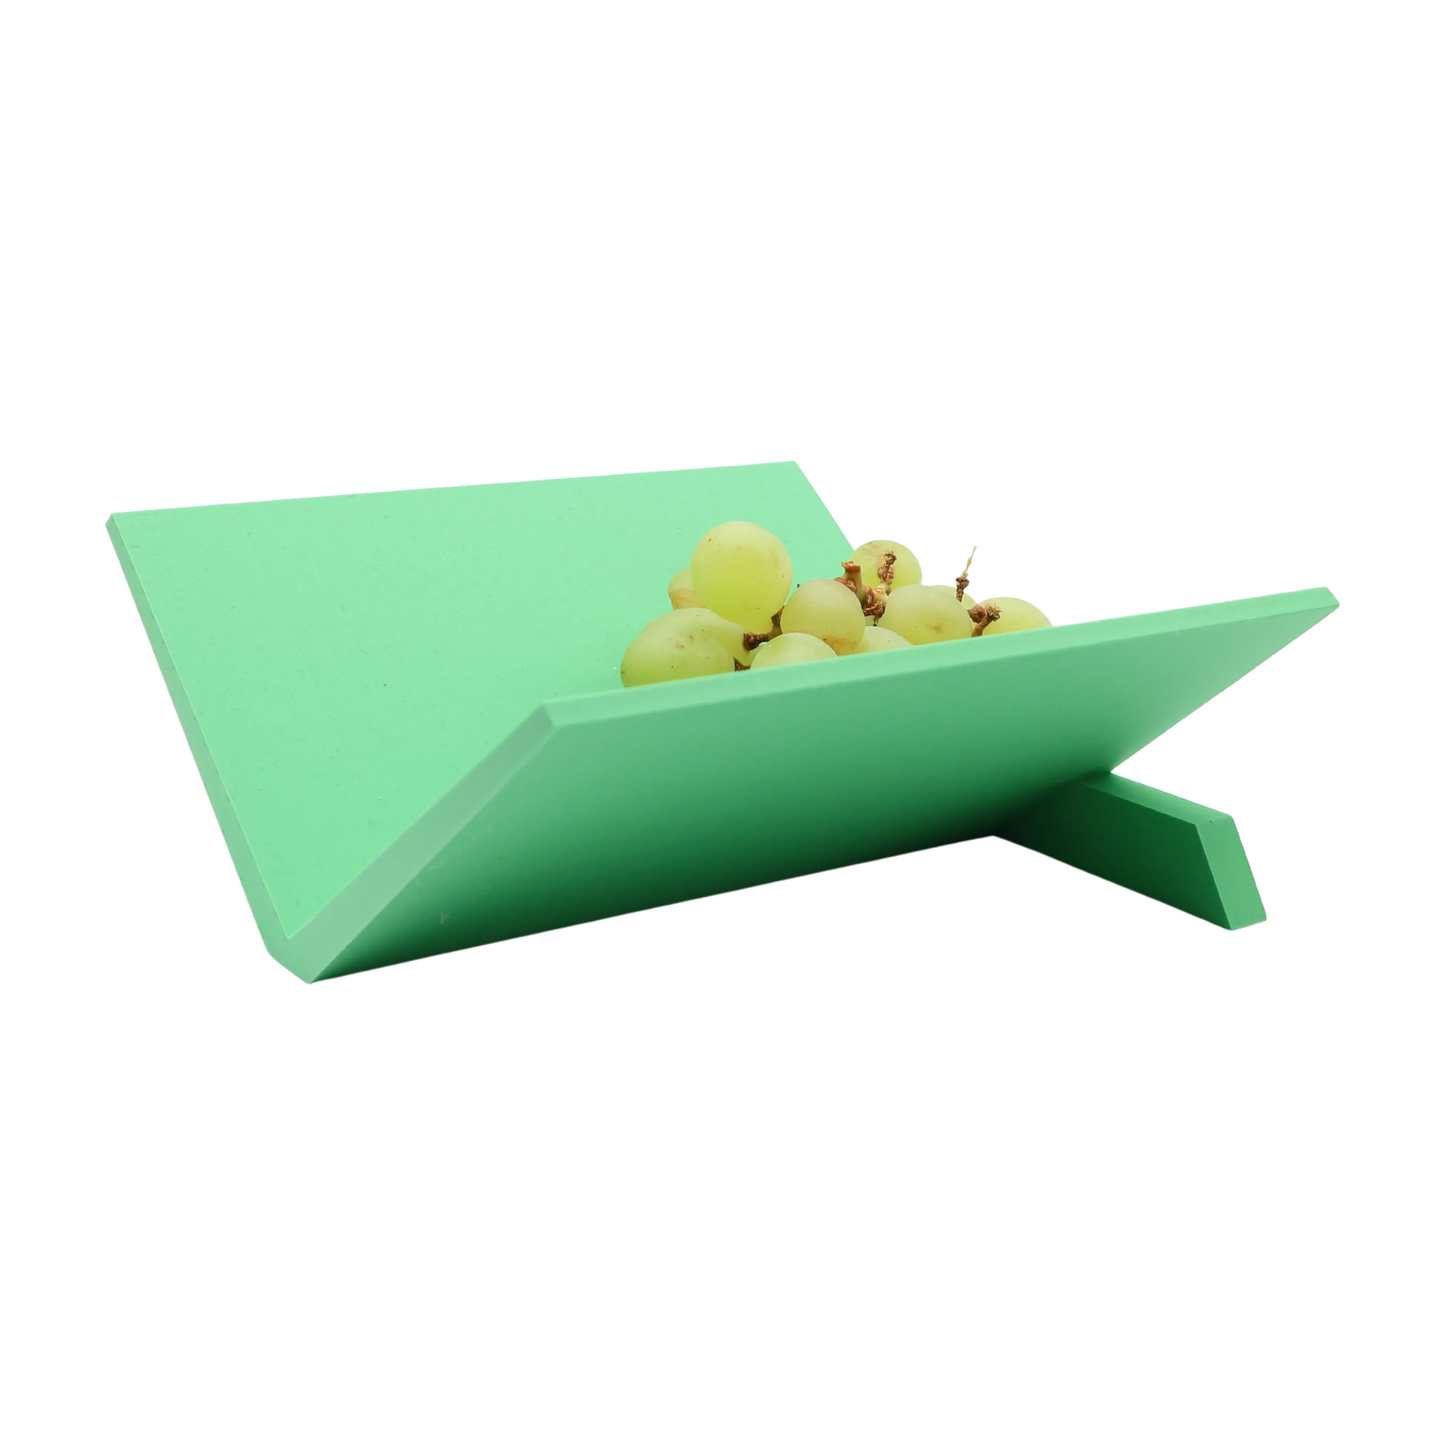 Merano design fruit bowl green edition